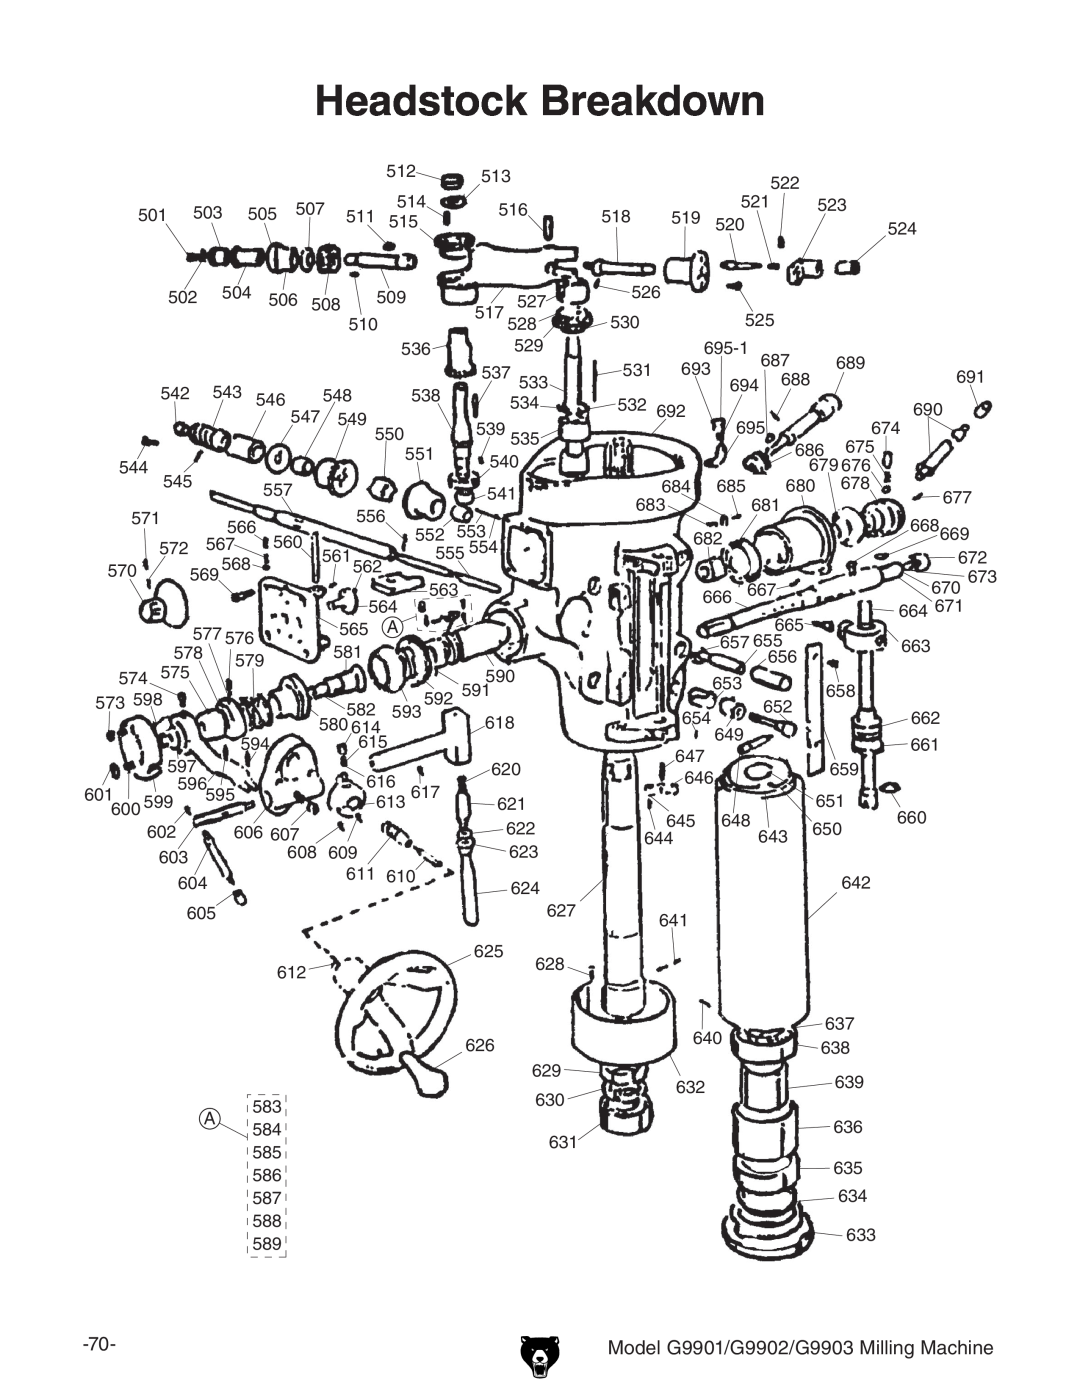 Grizzly manual Headstock Breakdown, Model G9901/G9902/G9903 Milling Machine 